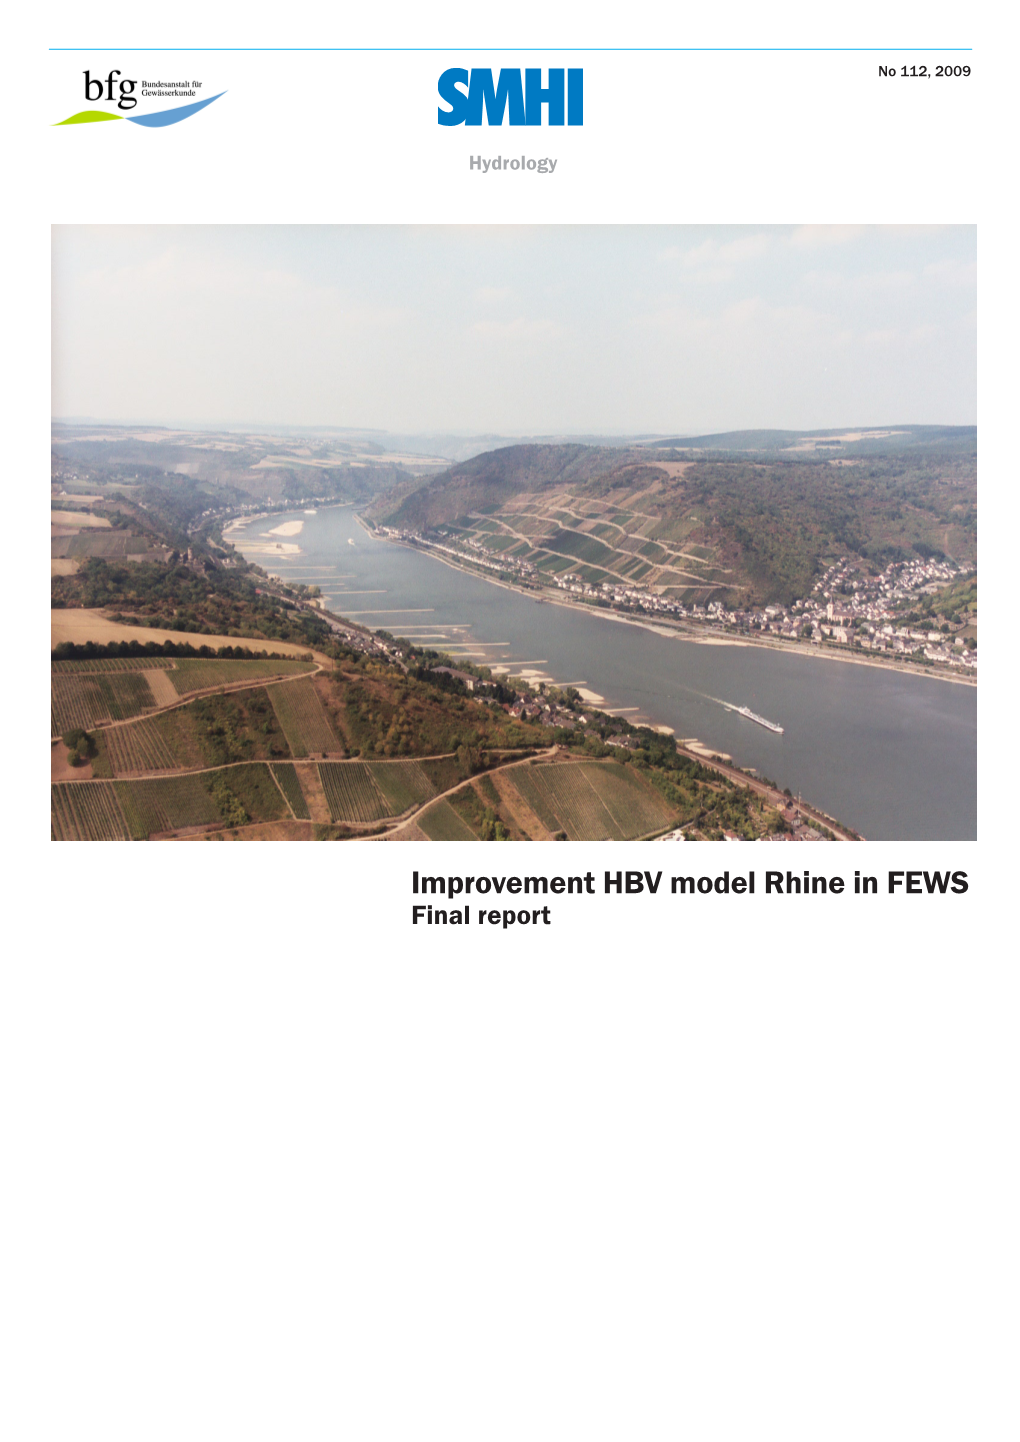 Improvement HBV Model Rhine in FEWS Final Report No 112, 2009